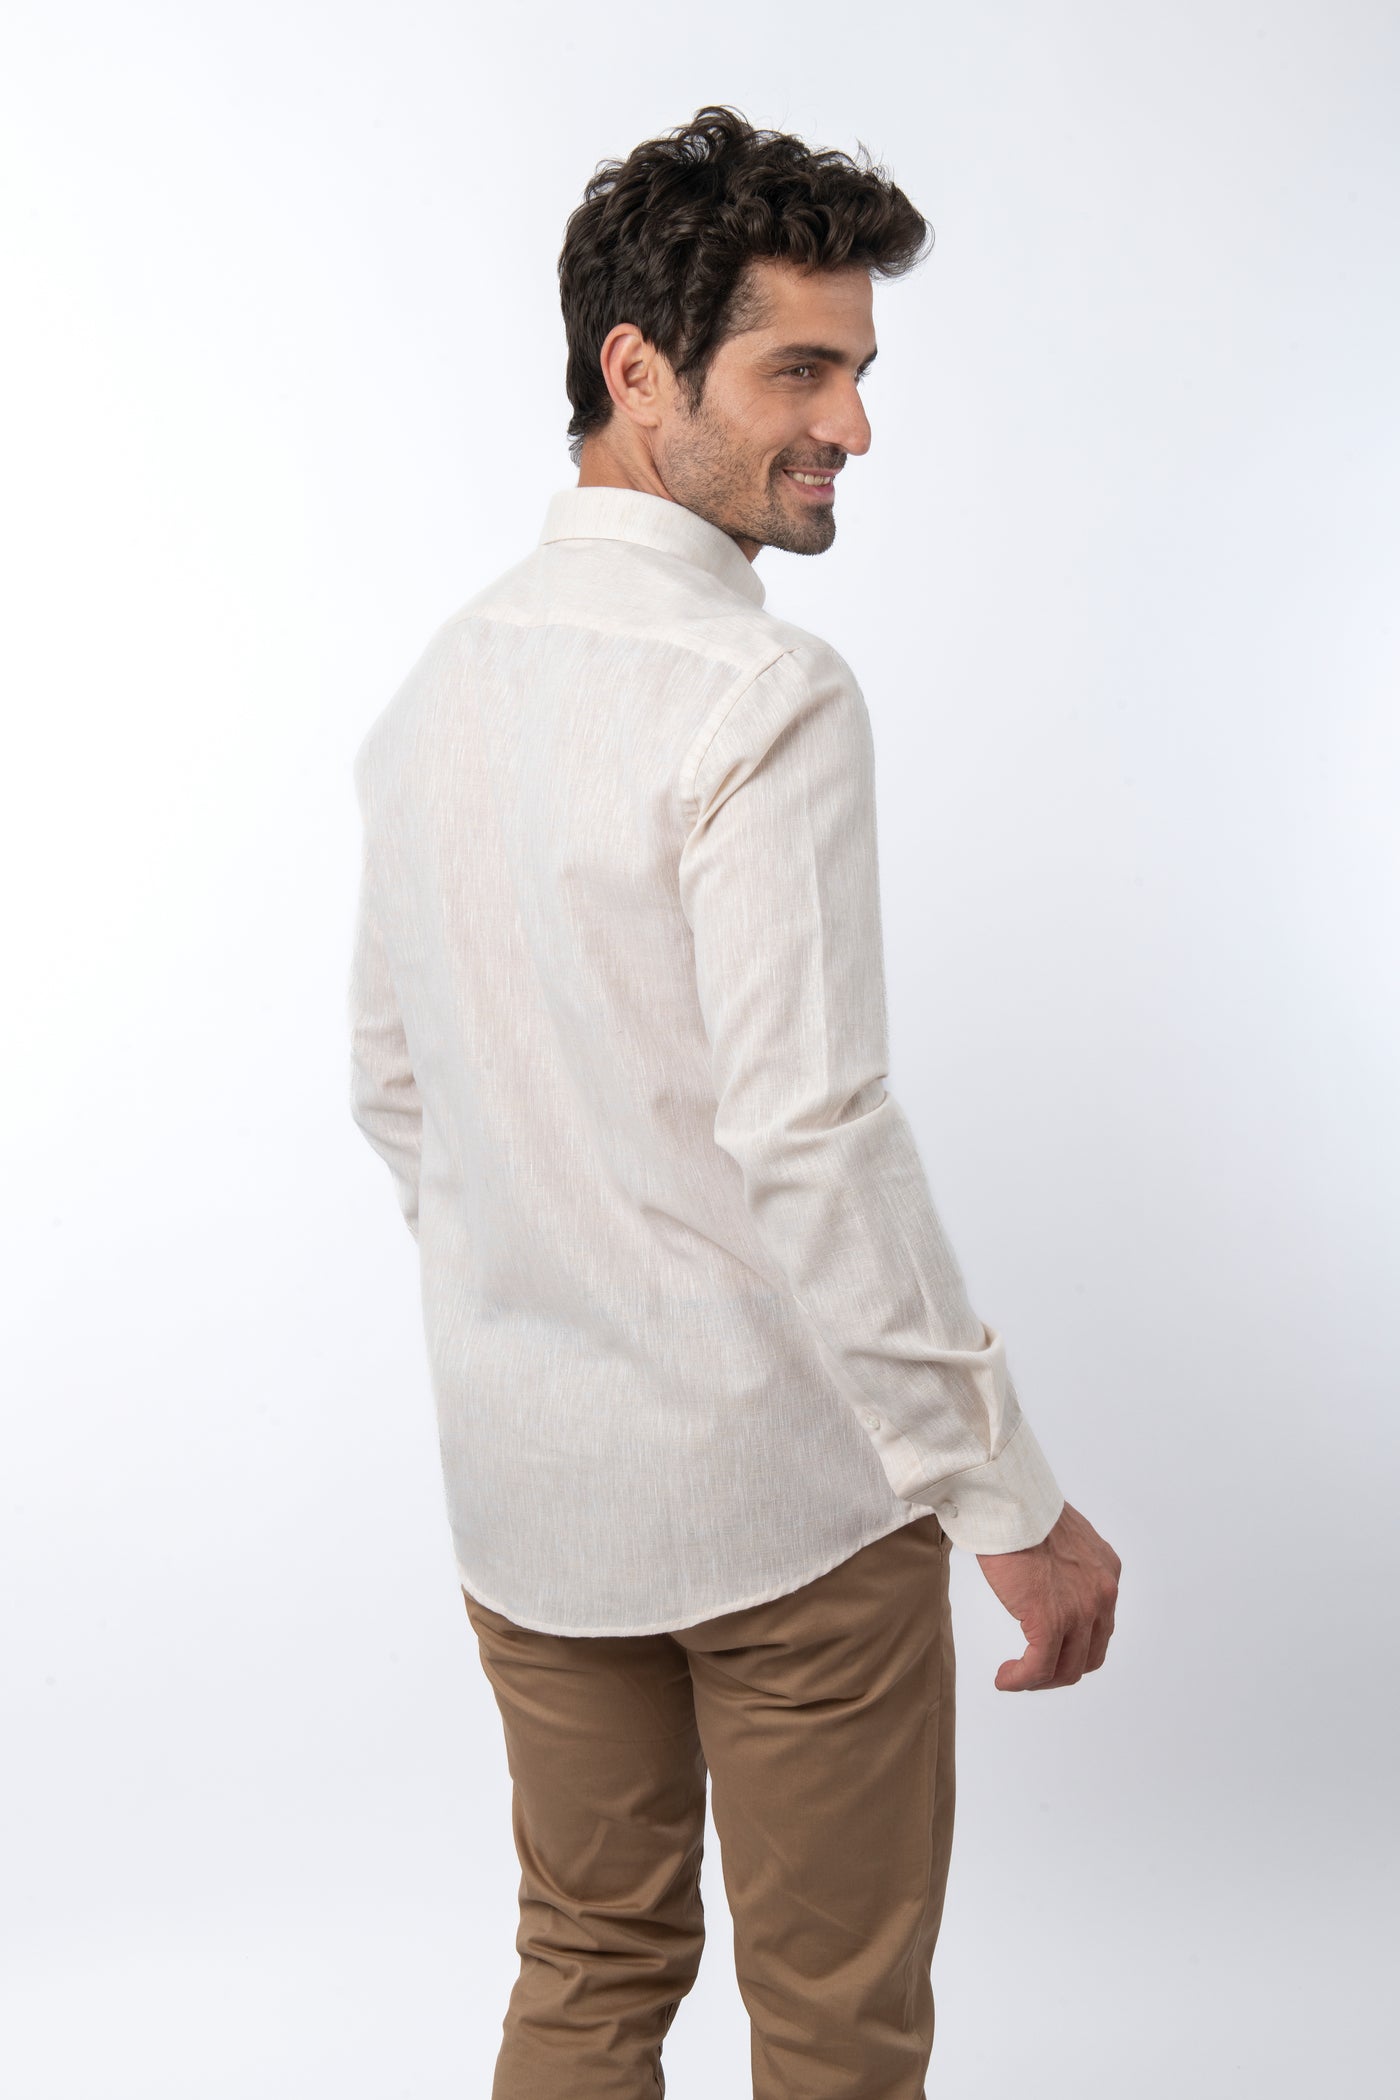 Linen Look  Cotton Linen Coloured Casual Shirt